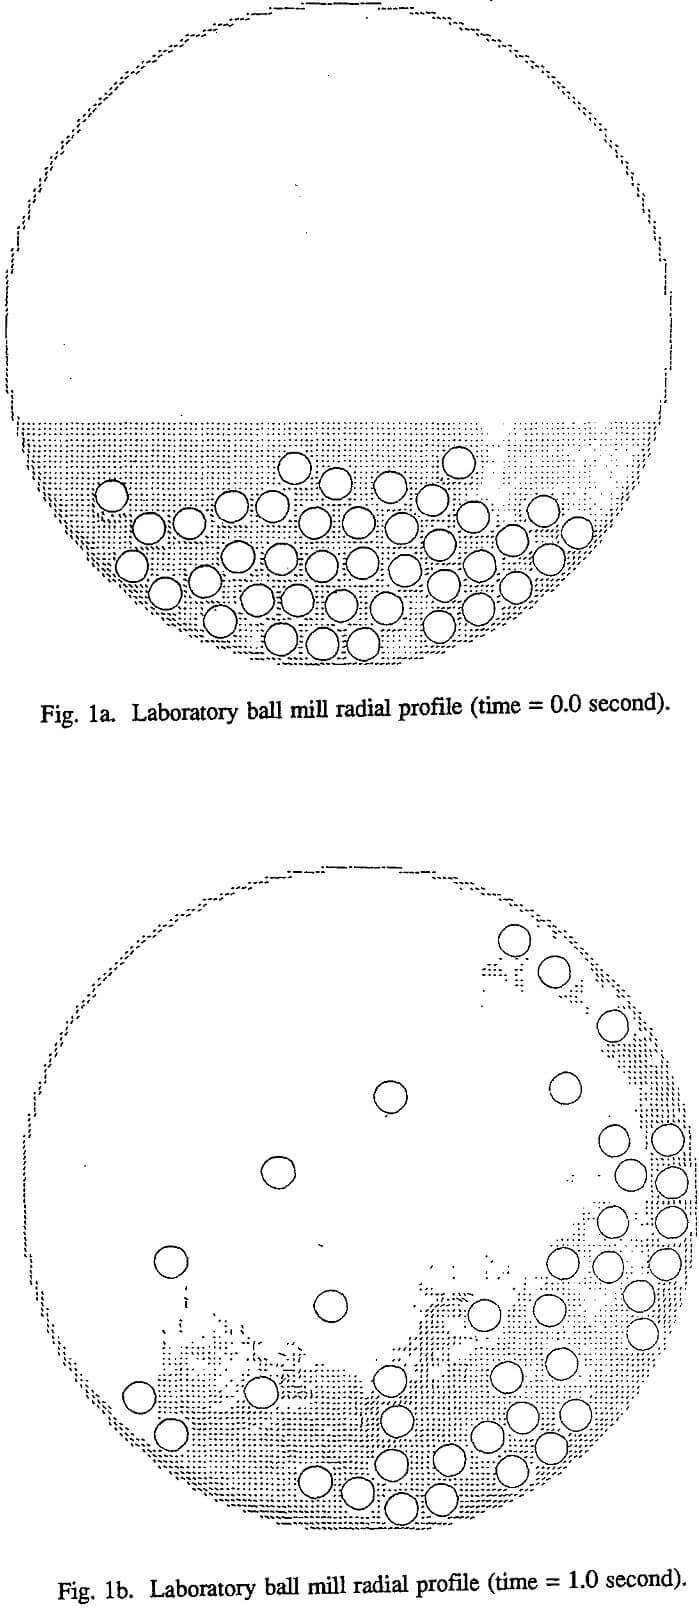 hydrodynamics laboratory ball mill